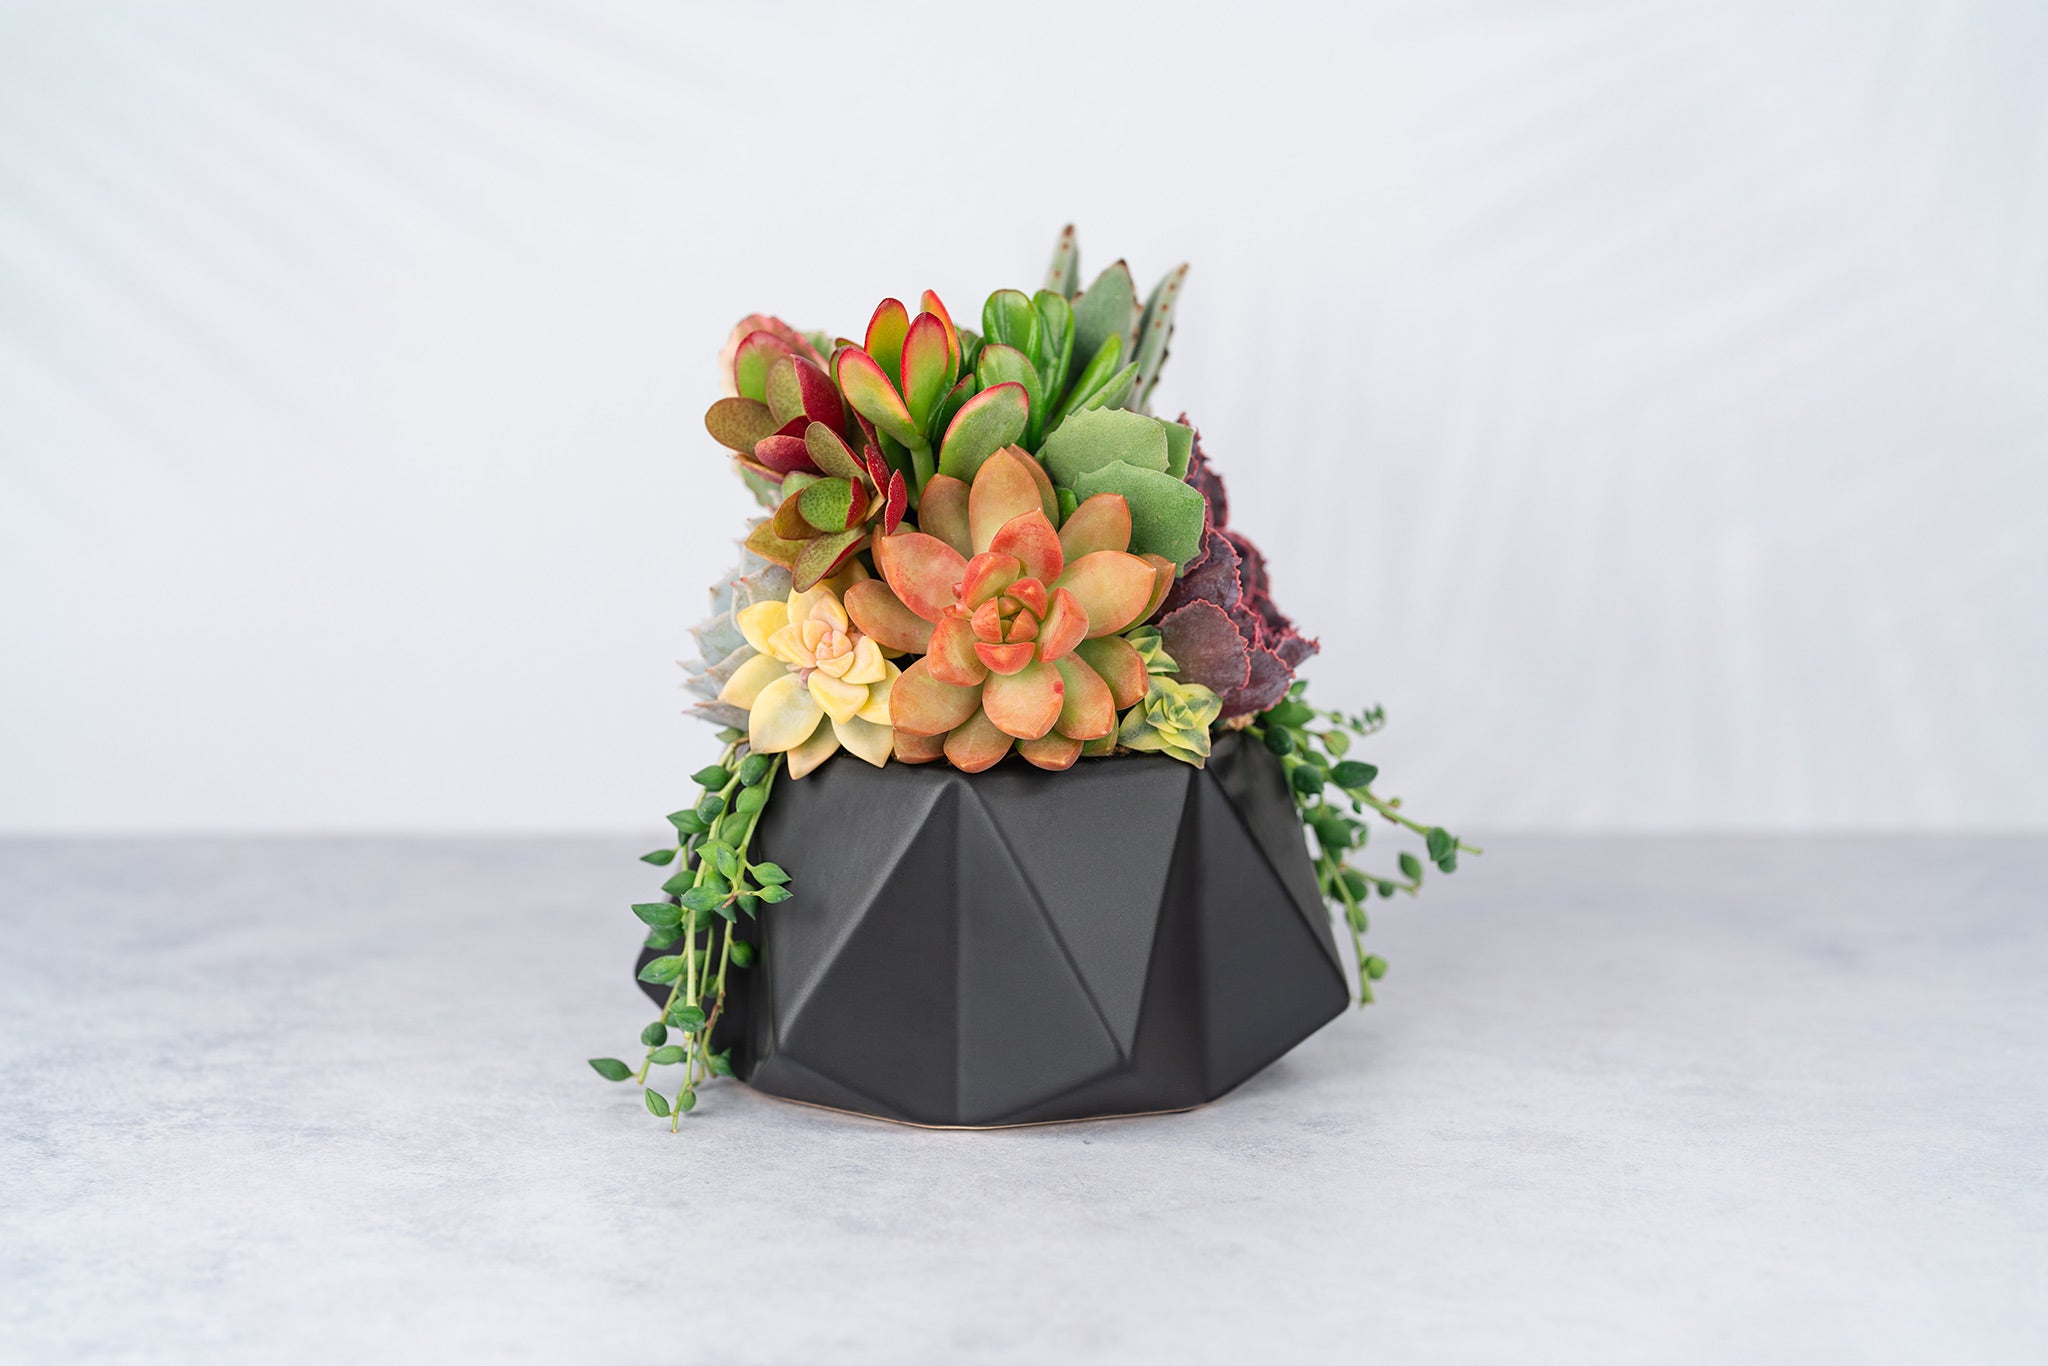 Geometric Black Bowl Succulent Arrangement Planter: Living Succulent Gift or Centerpiece for Weddings and Events